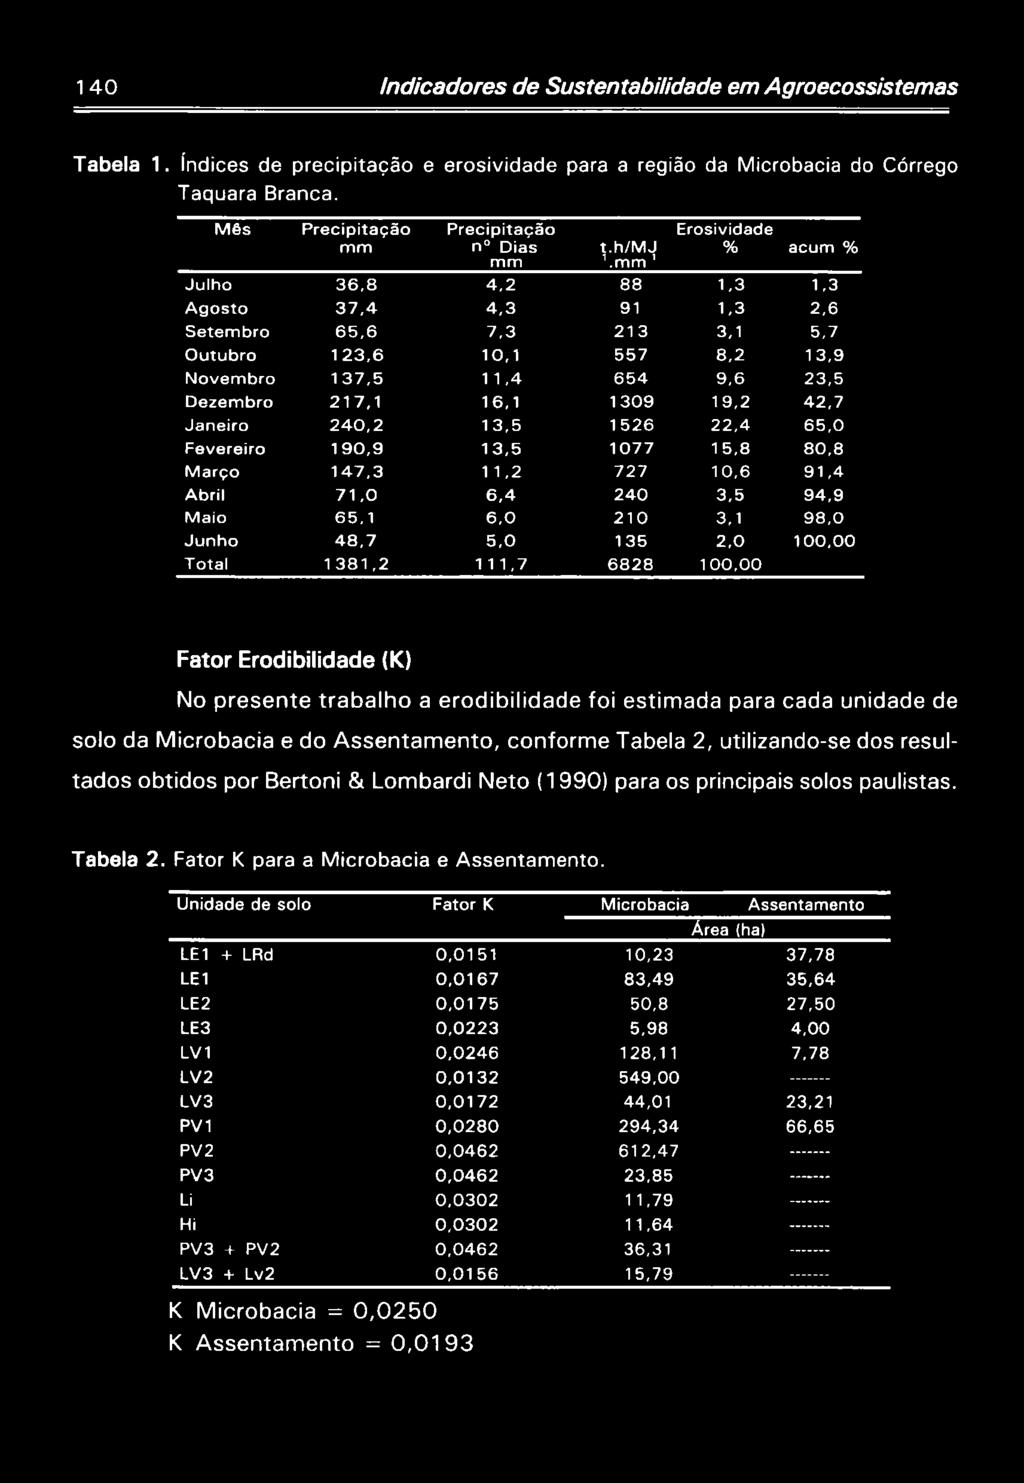 0 100,00 Fator Erodibilidade (K) No presente trabalho a erodibilidade foi estimada para cada unidade de solo da Microbacia e do Assentamento, conforme Tabela 2, utilizando-se dos resultados obtidos